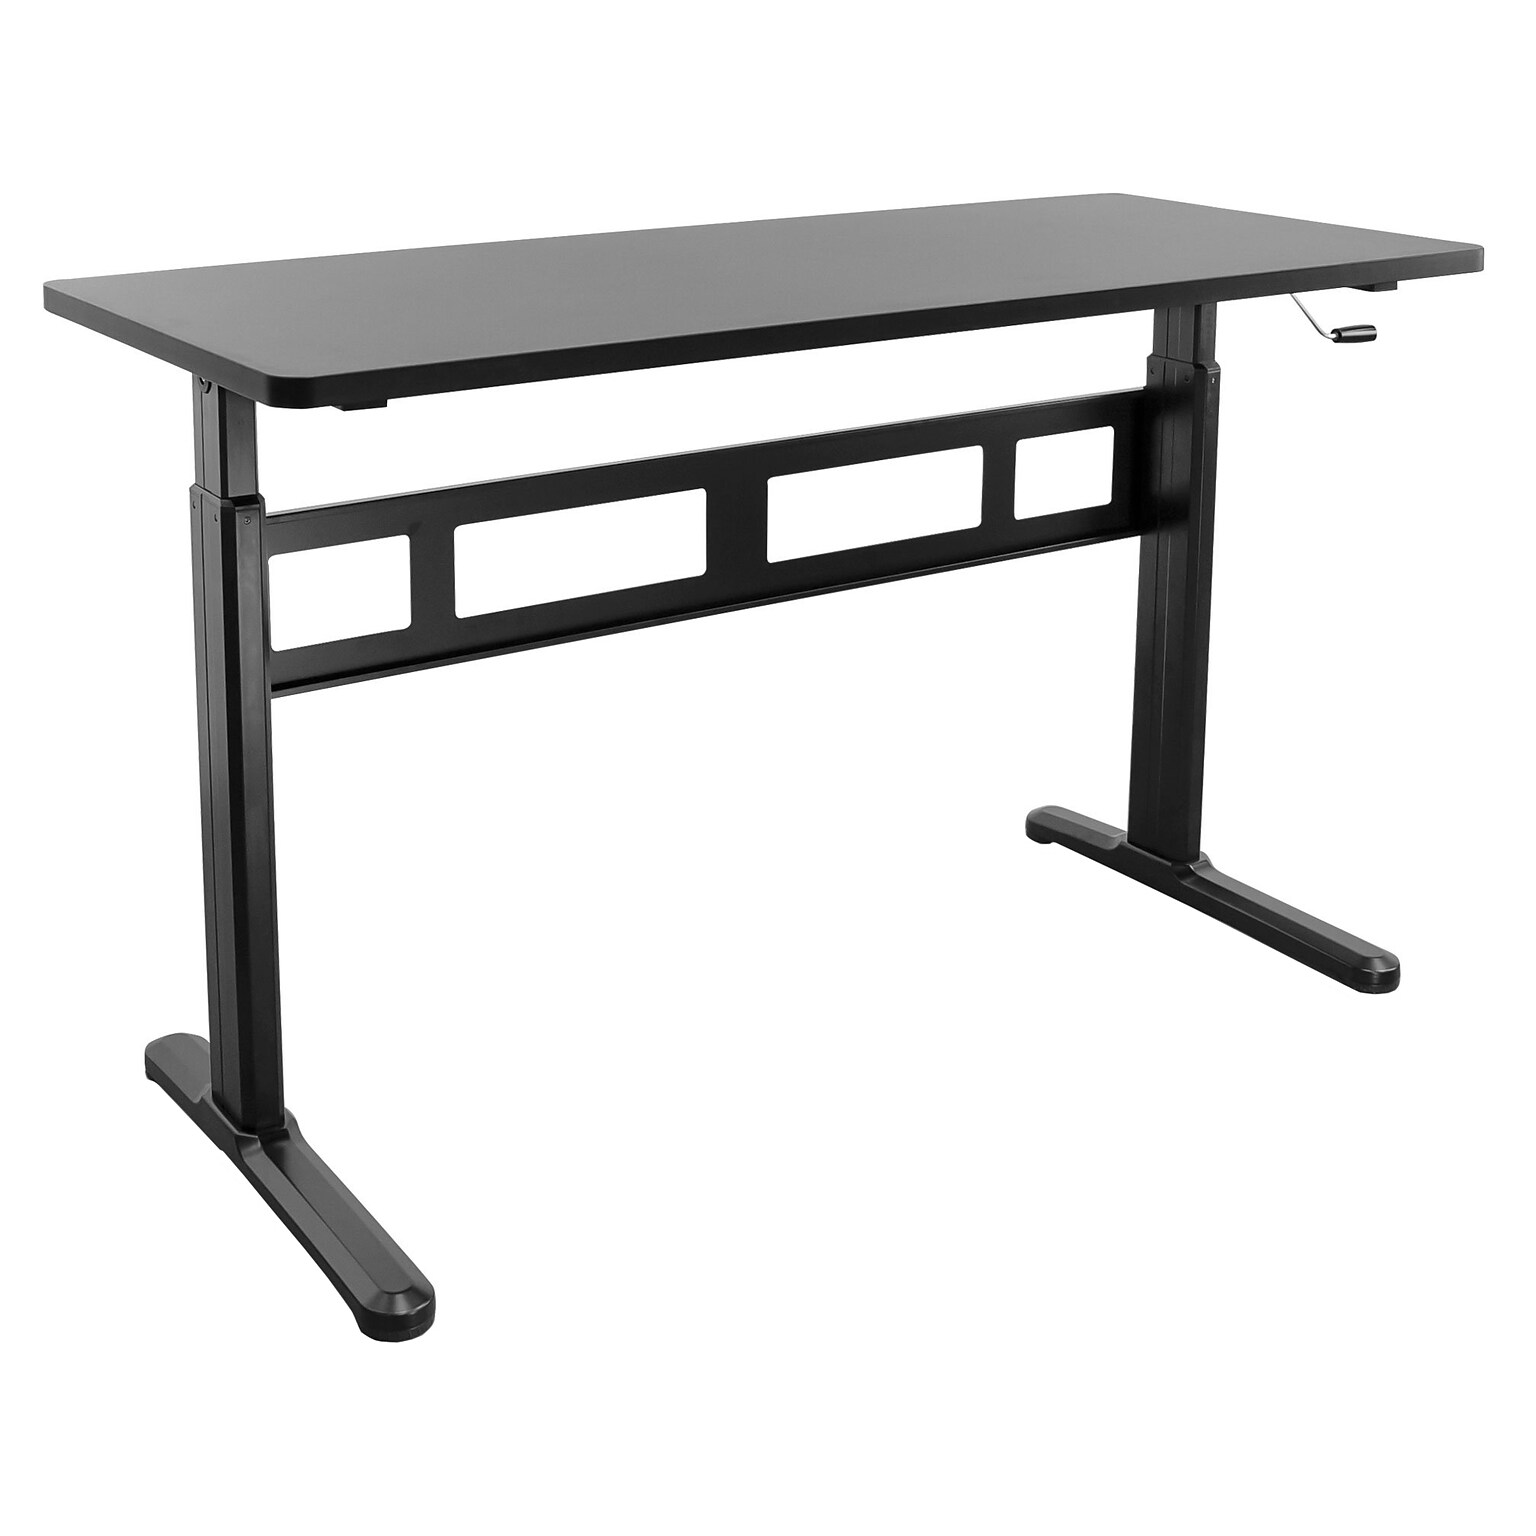 Mount-It! 55W Manual Adjustable Standing Desk, Black (MI-7981)